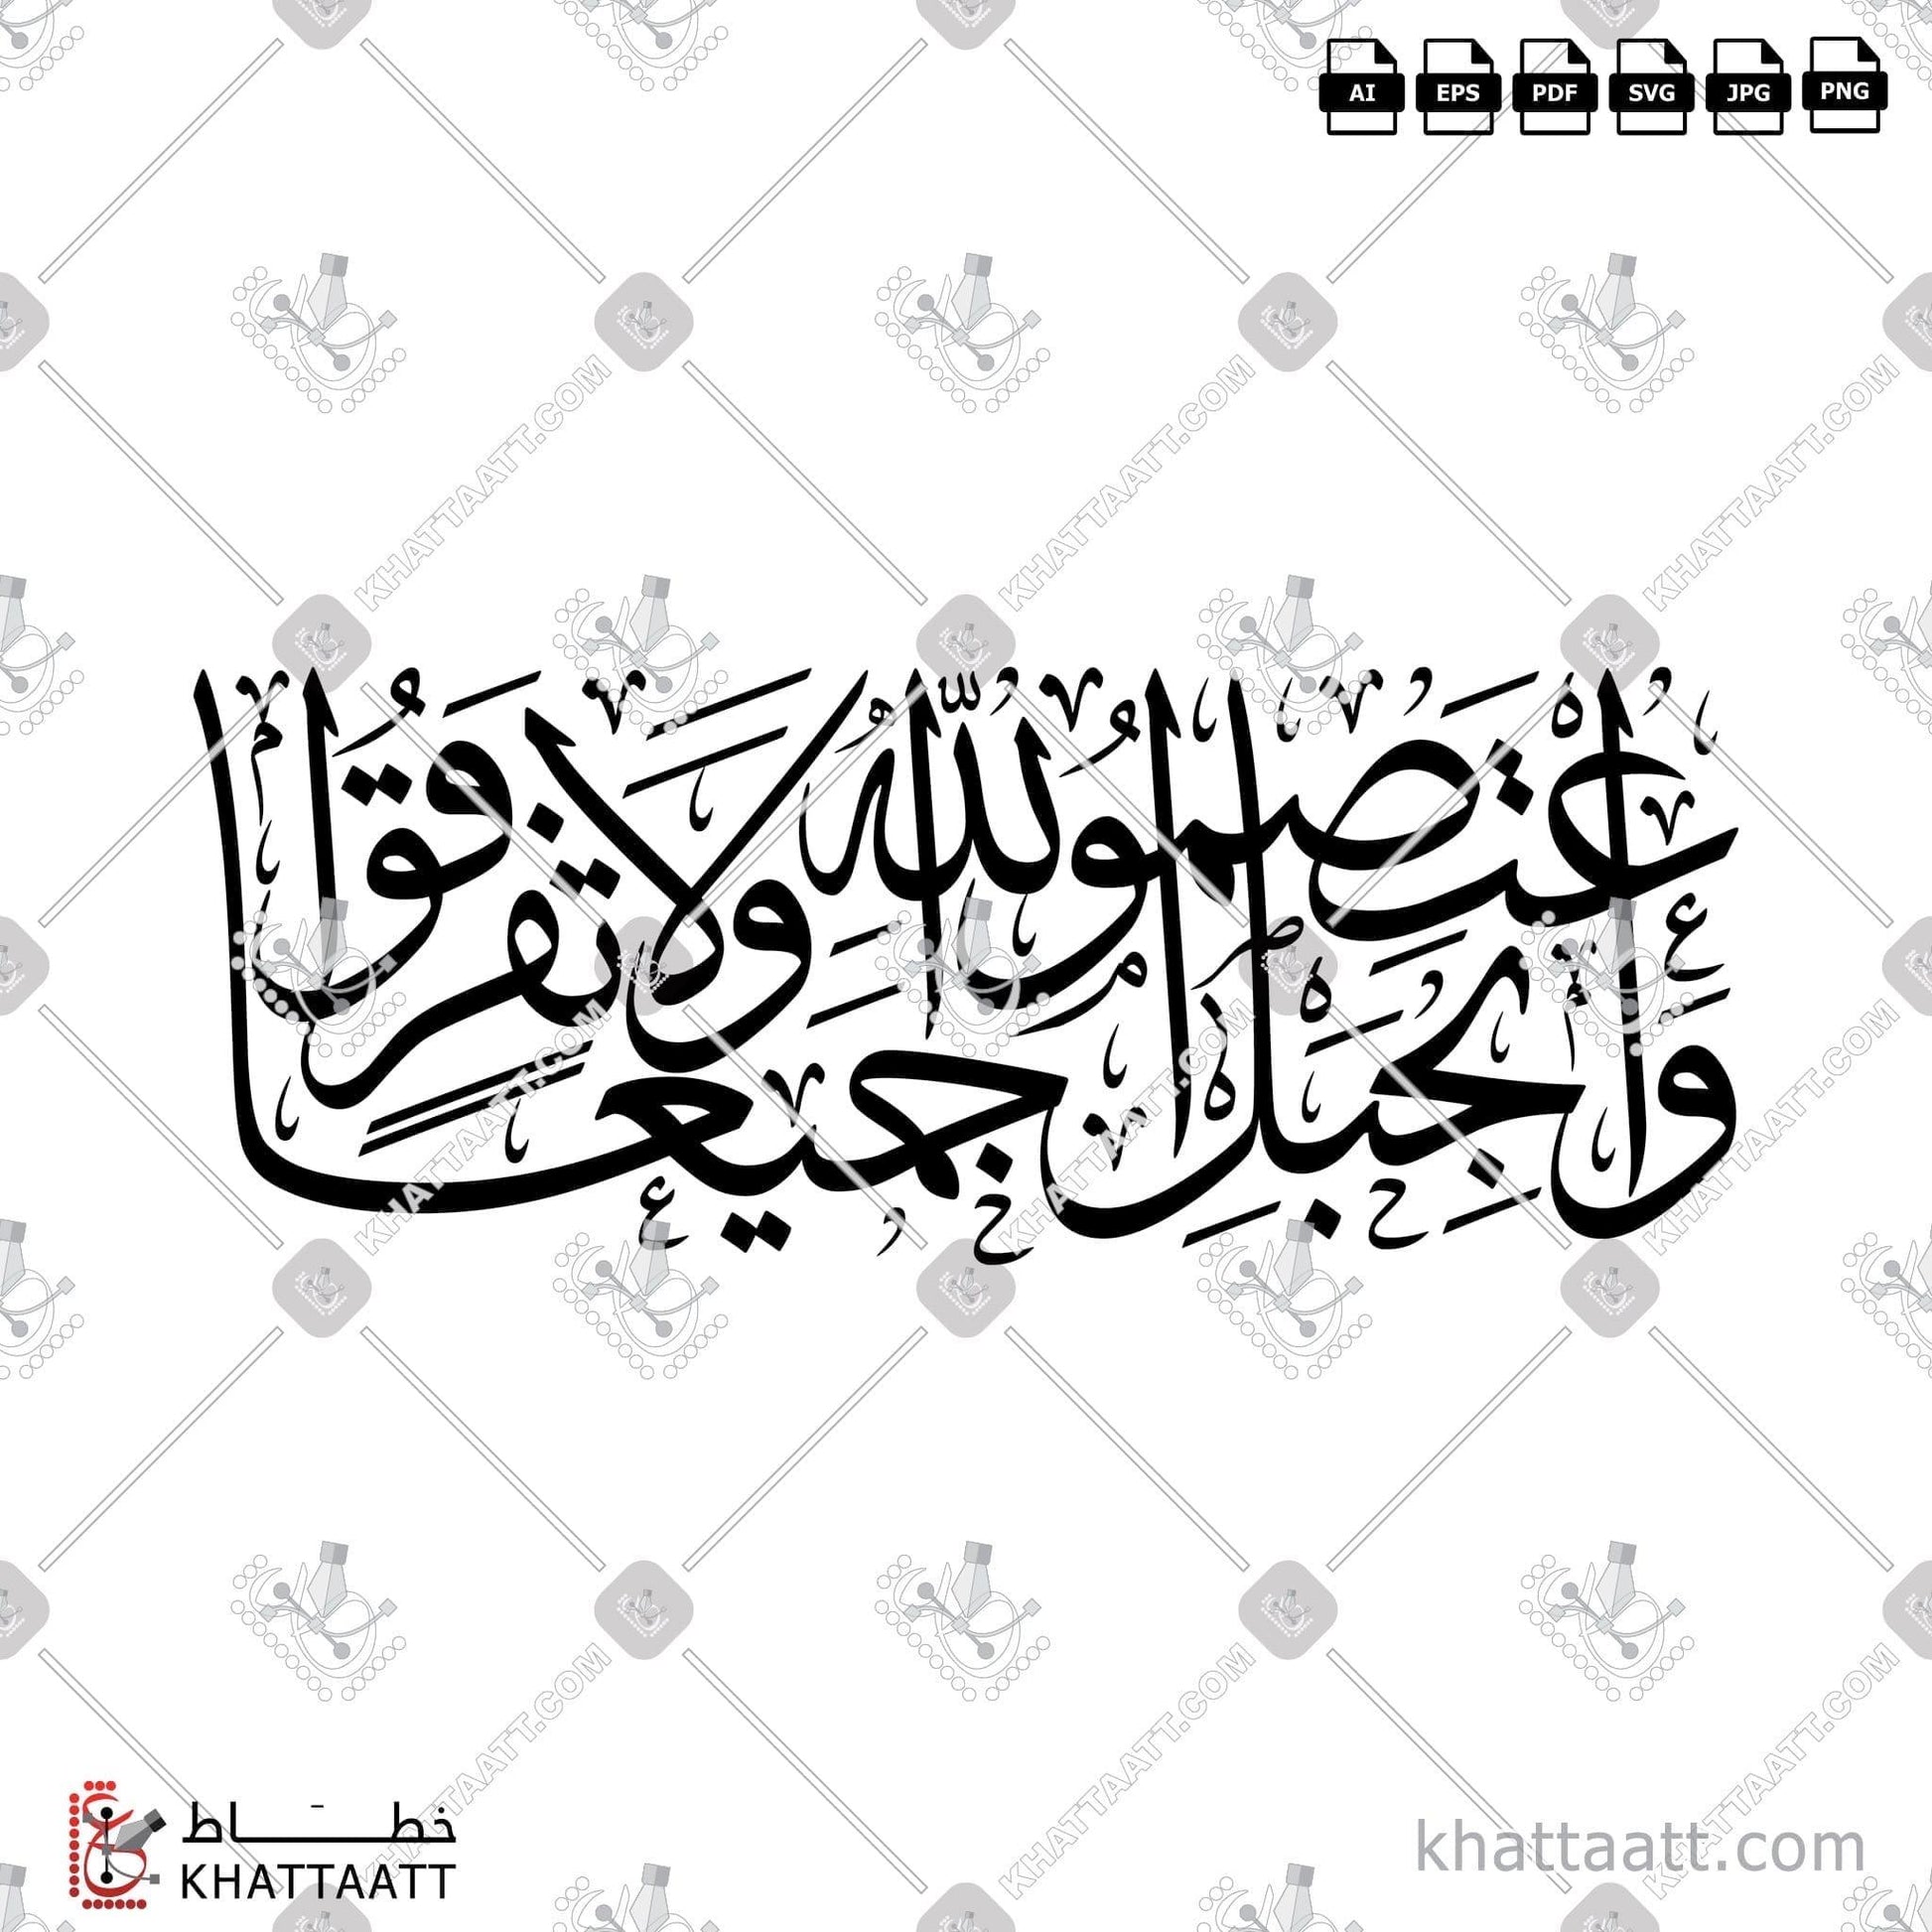 Digital Arabic calligraphy vector of واعتصموا بحبل الله جميعا ولا تفرقوا in Thuluth - خط الثلث